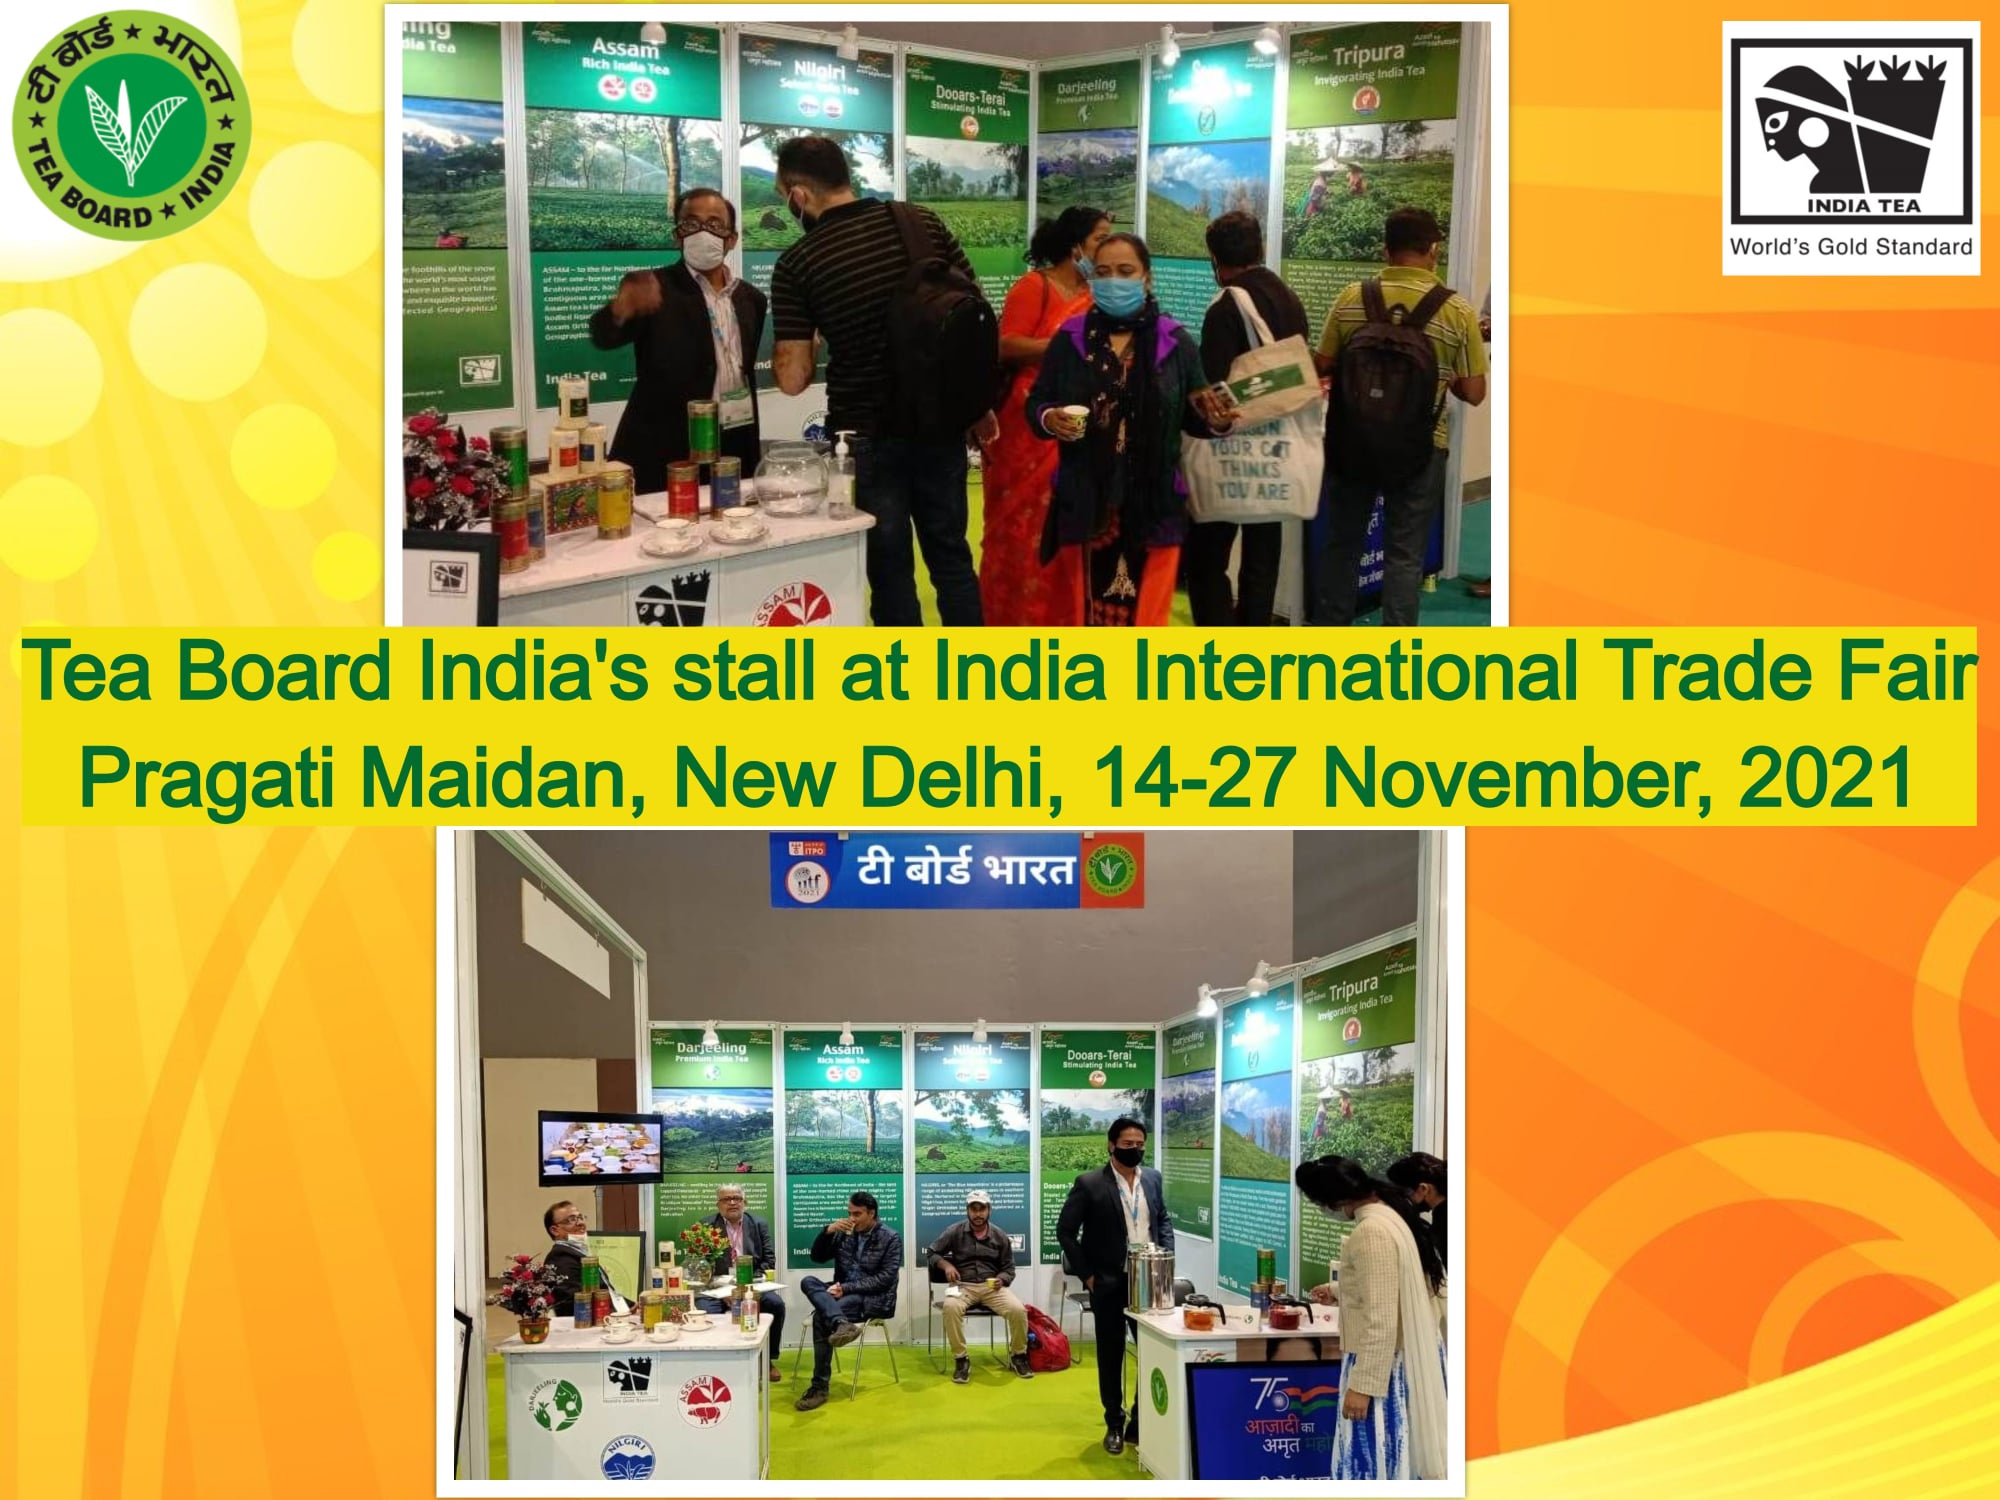 Tea Board India participates at India International Trade Fair, Pragati Maidan, New Delhi, 14-27 November 2021